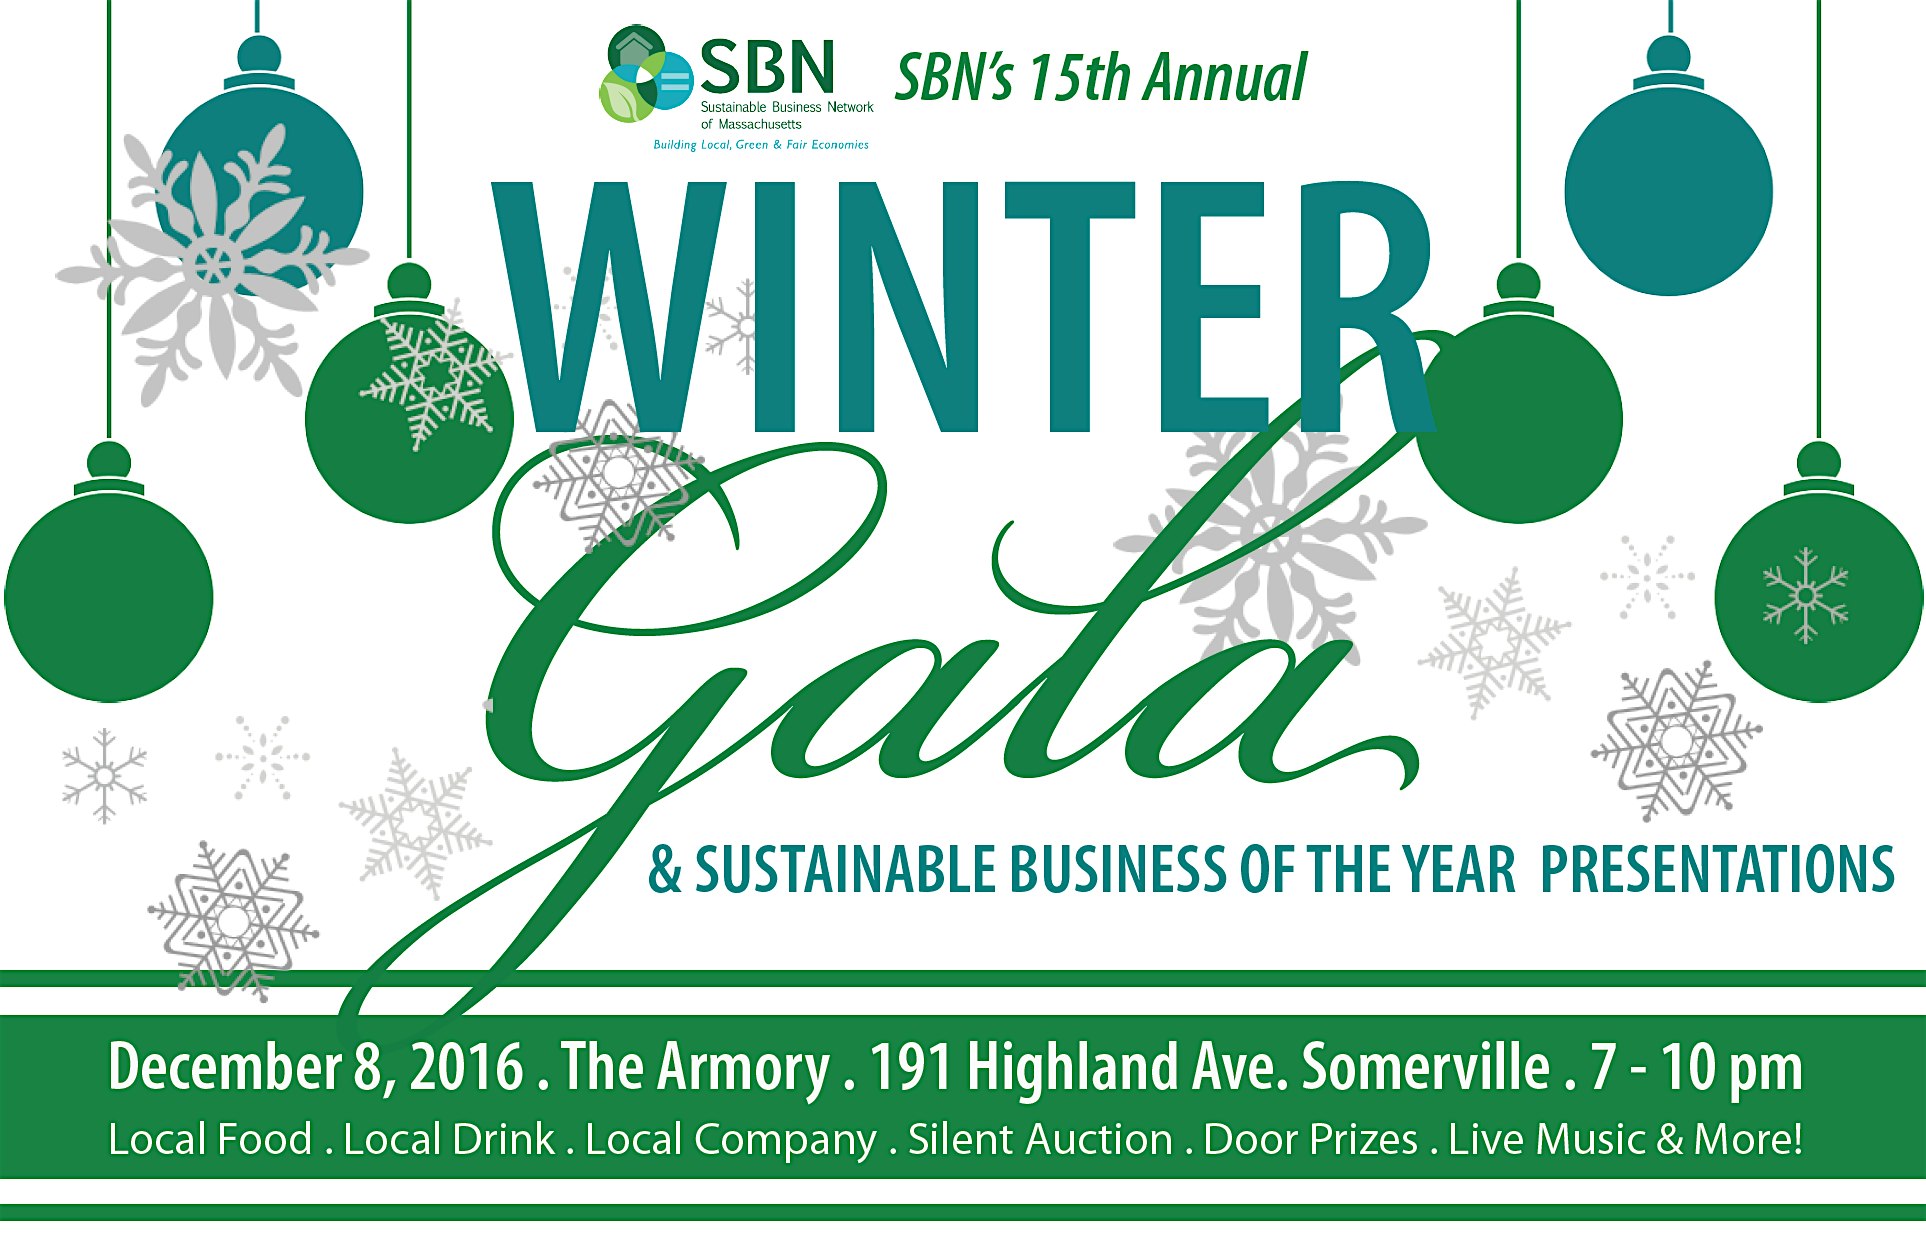 SBN’s 15th Annual Winter Gala